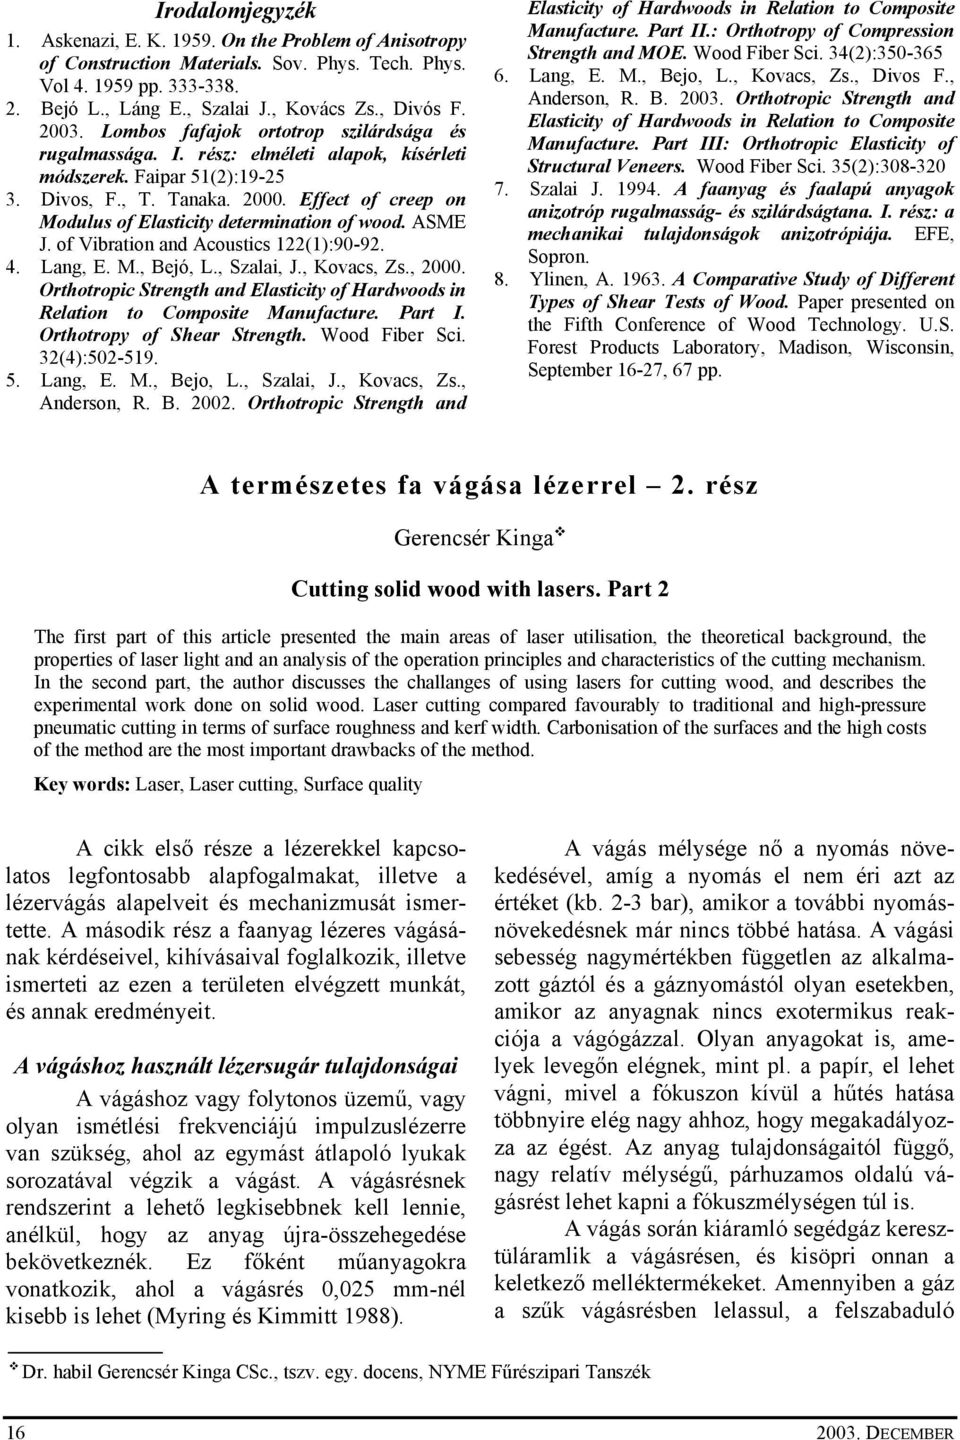 Effect of creep on Modulus of Elasticity determination of wood. ASME J. of Vibration and Acoustics 122(1):90-92. 4. Lang, E. M., Bejó, L., Szalai, J., Kovacs, Zs., 2000.